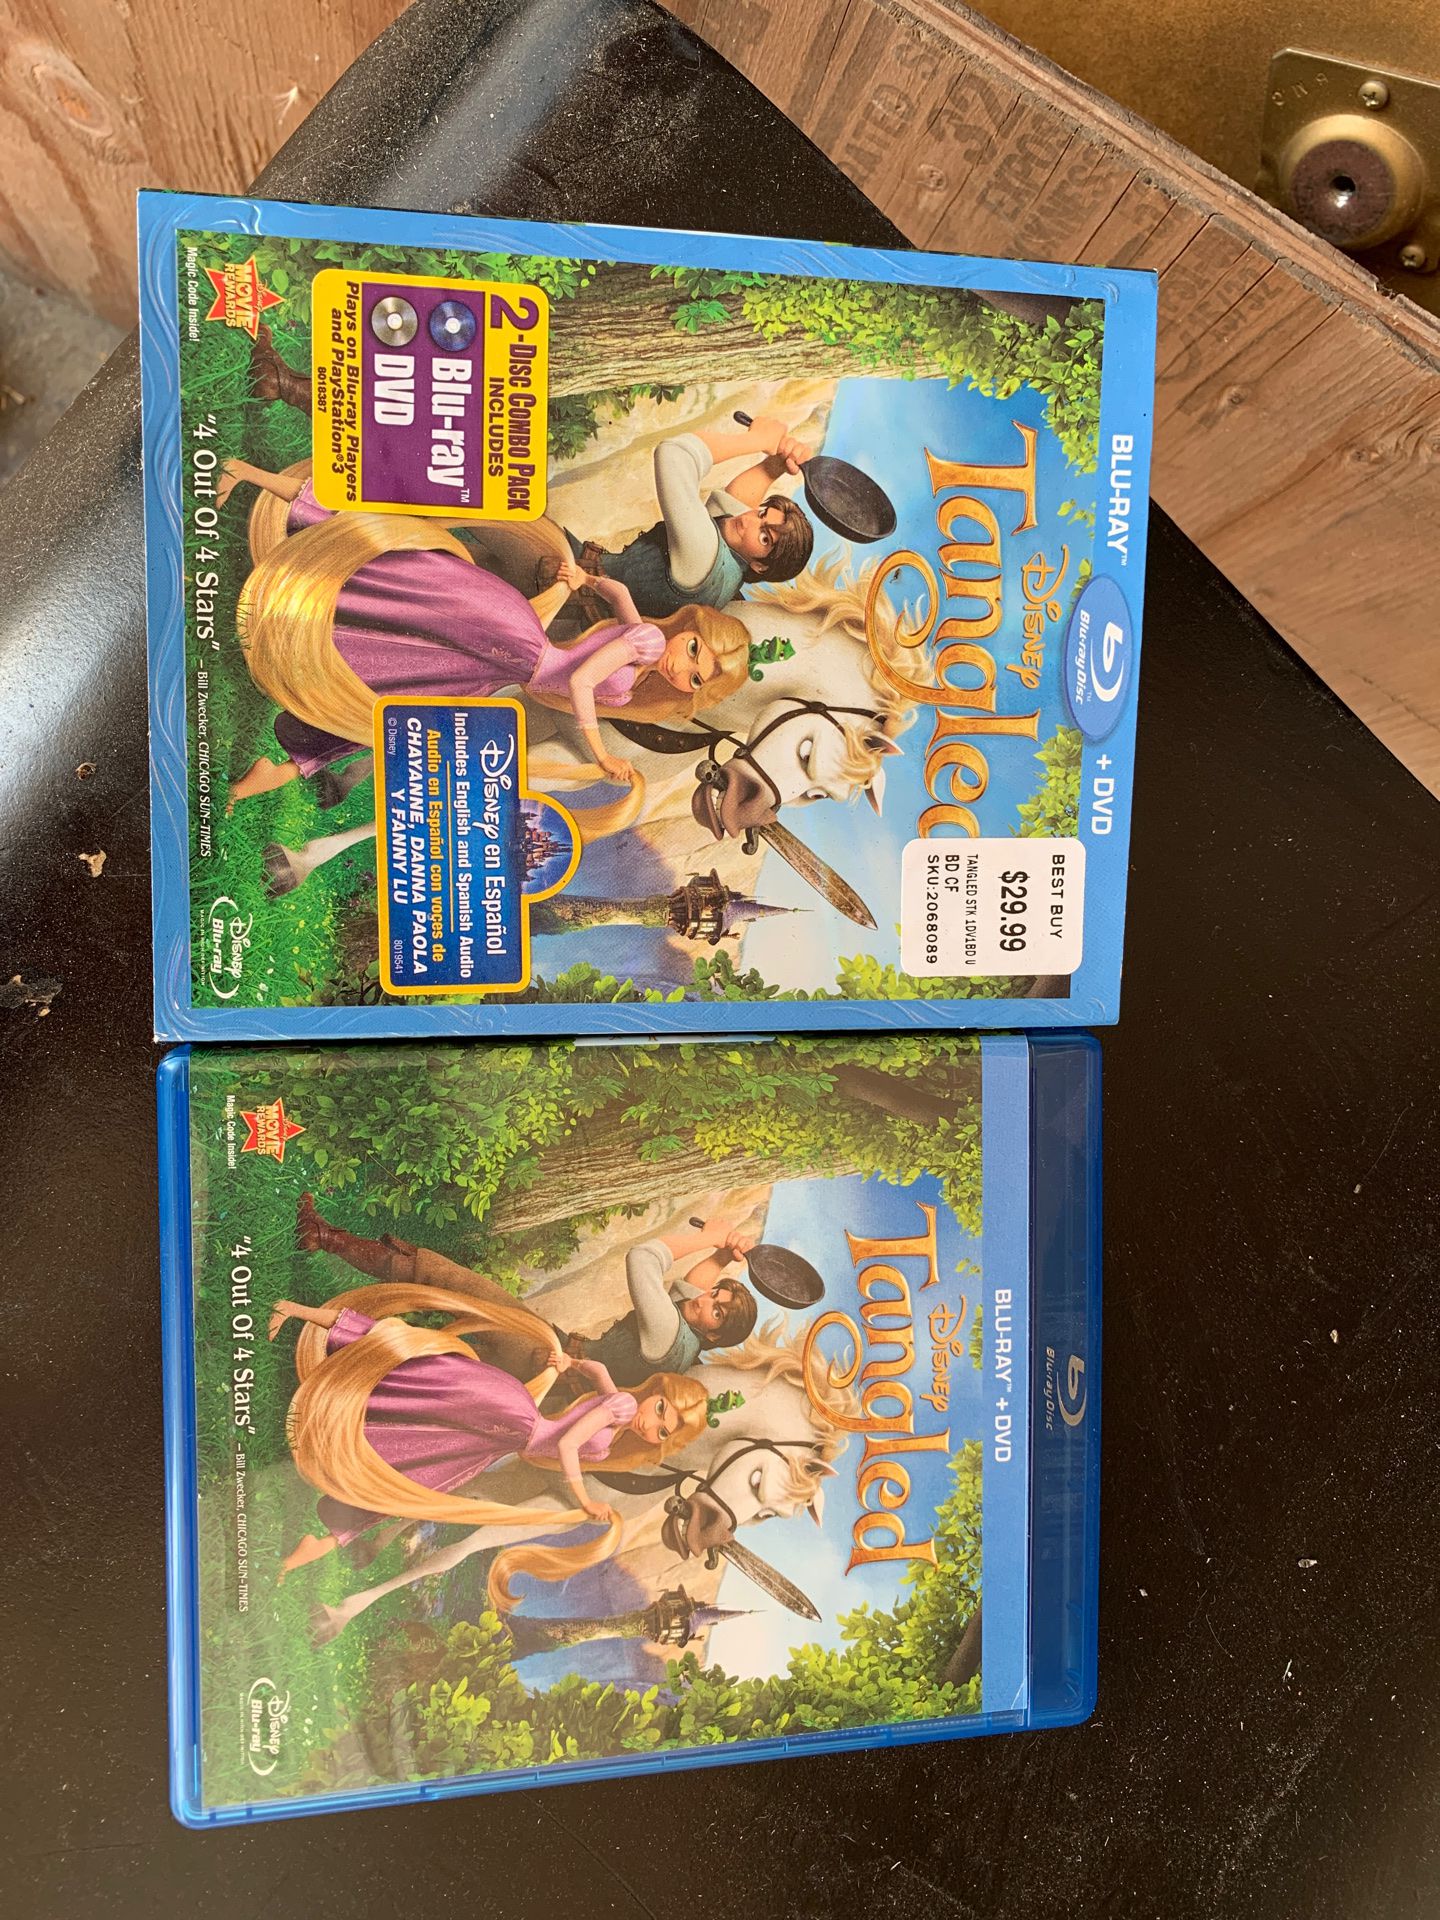 Blue-ray + DVD Disney Tangle movie